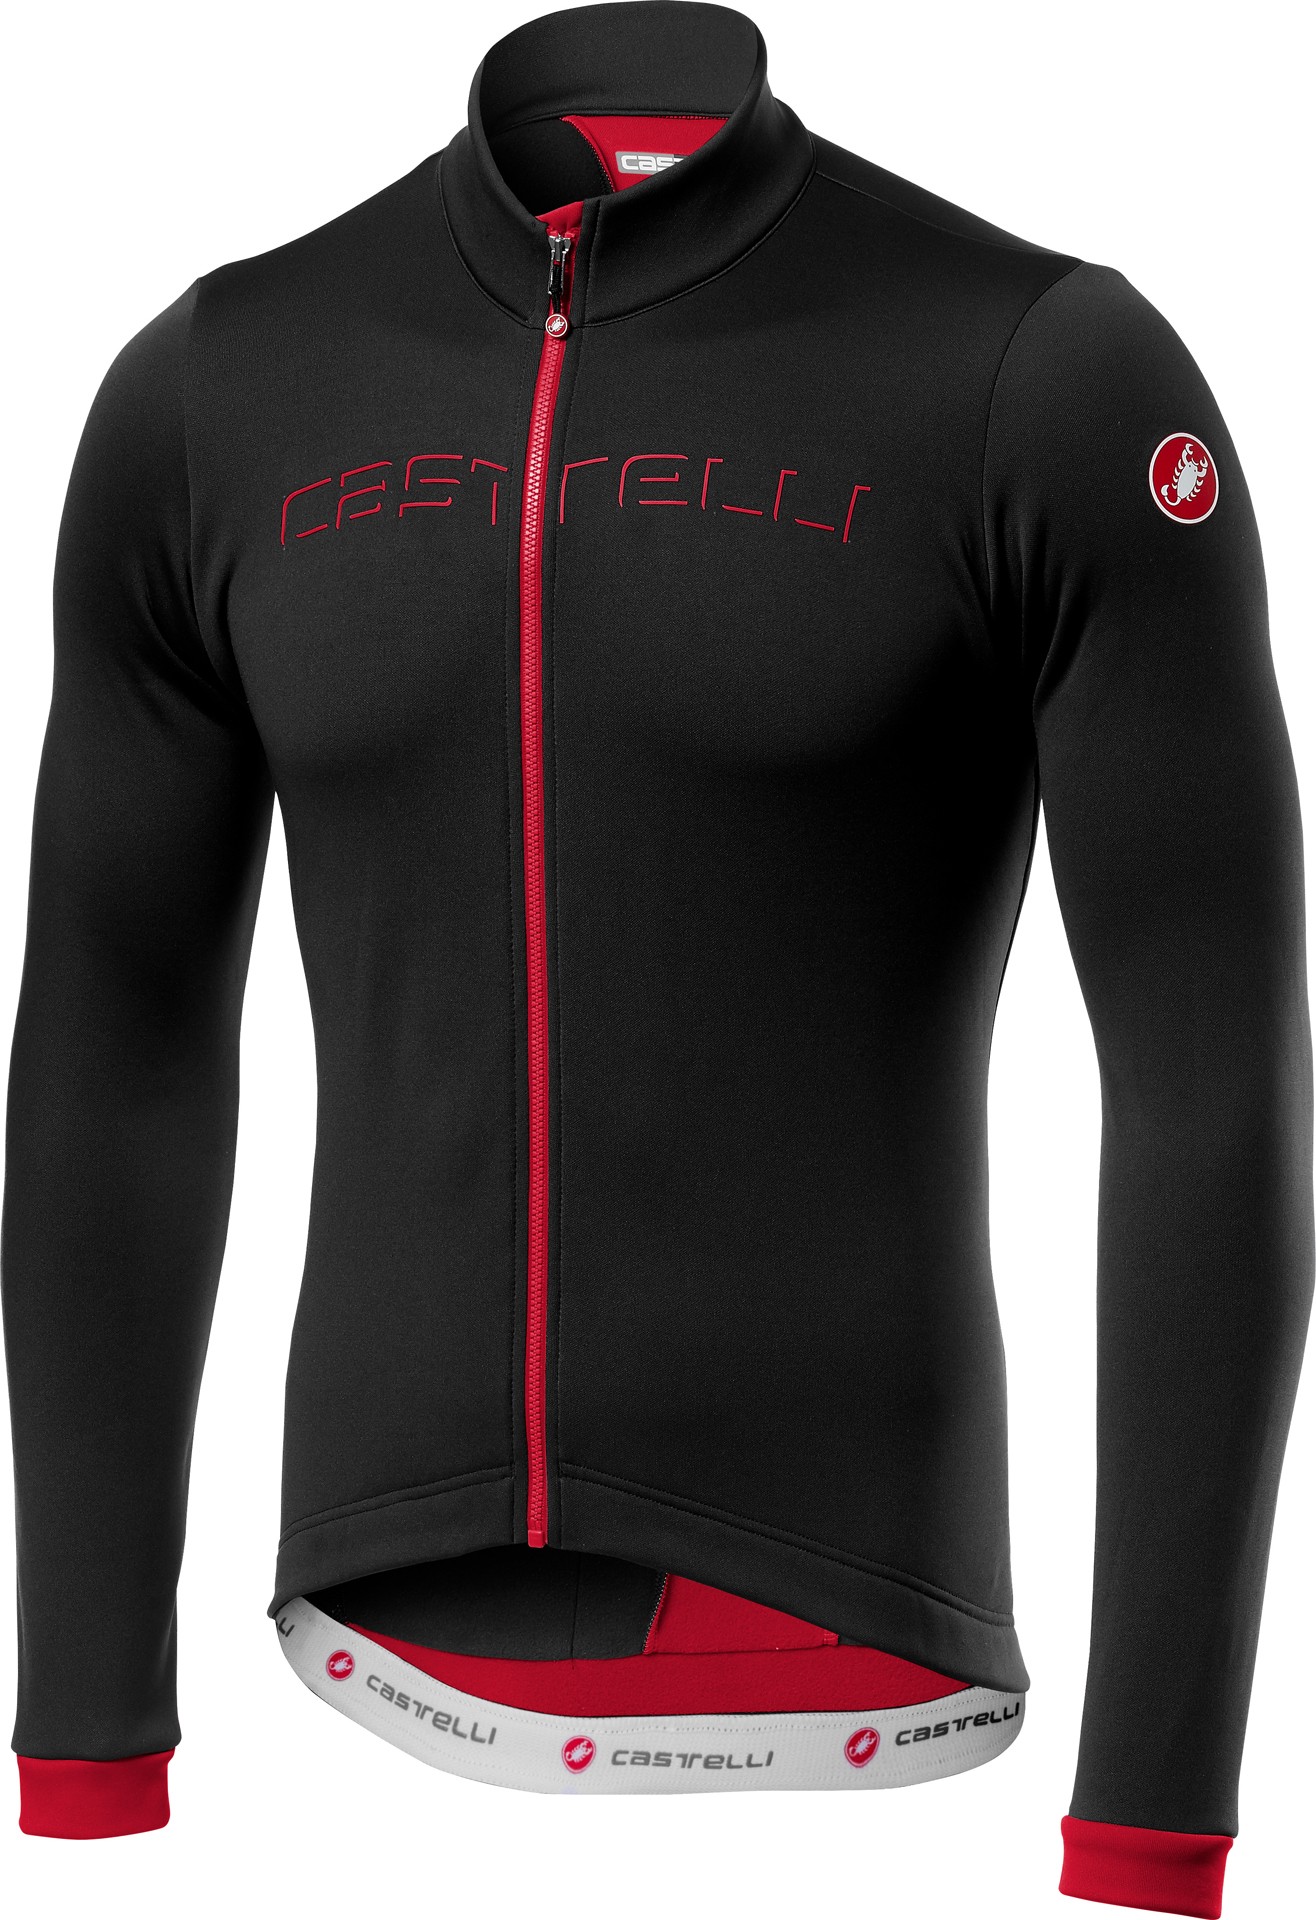 Castelli fondo fietsshirt met lange mouwen zwart rood